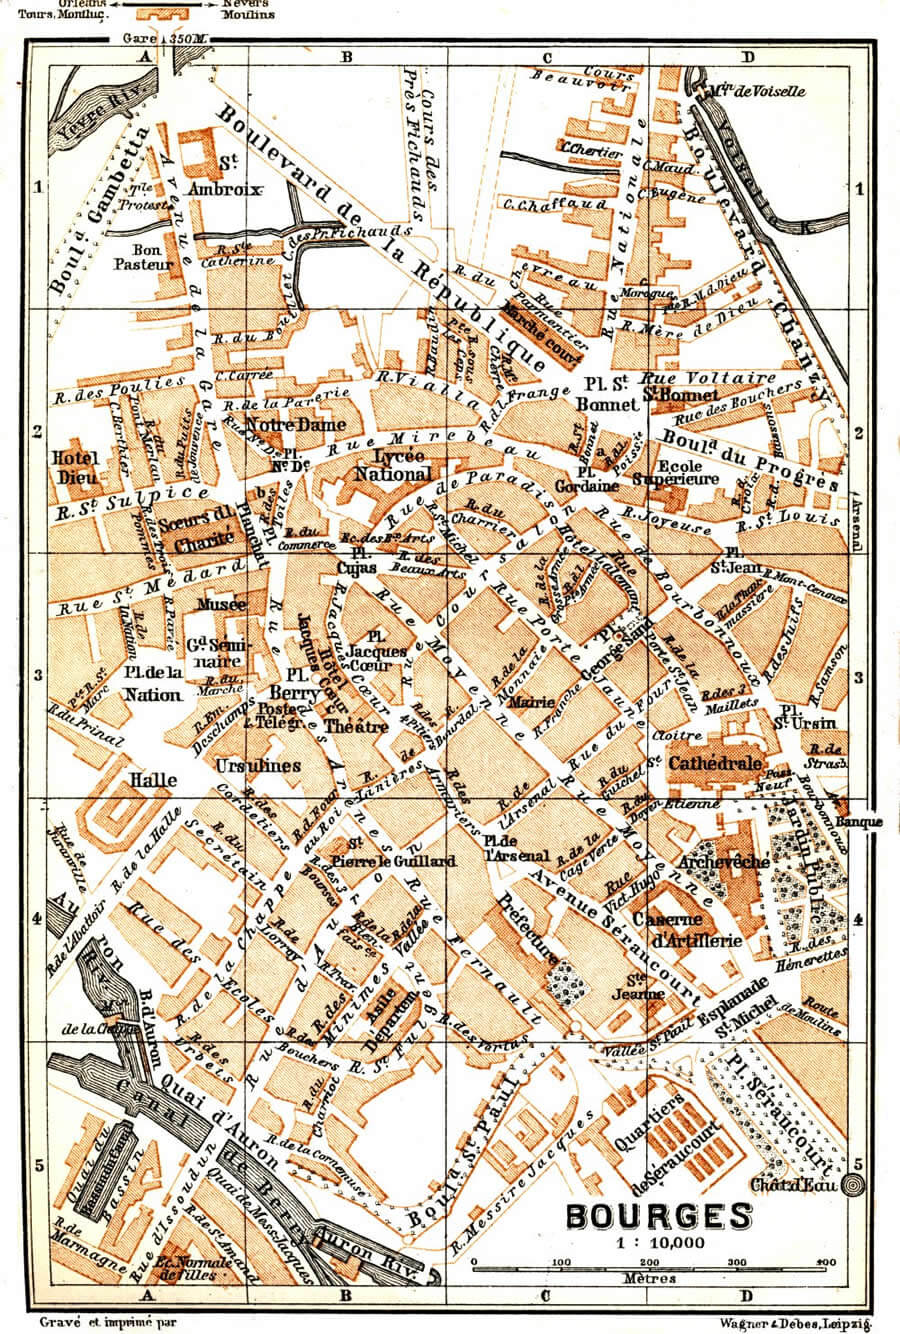 Bourges plan 1899